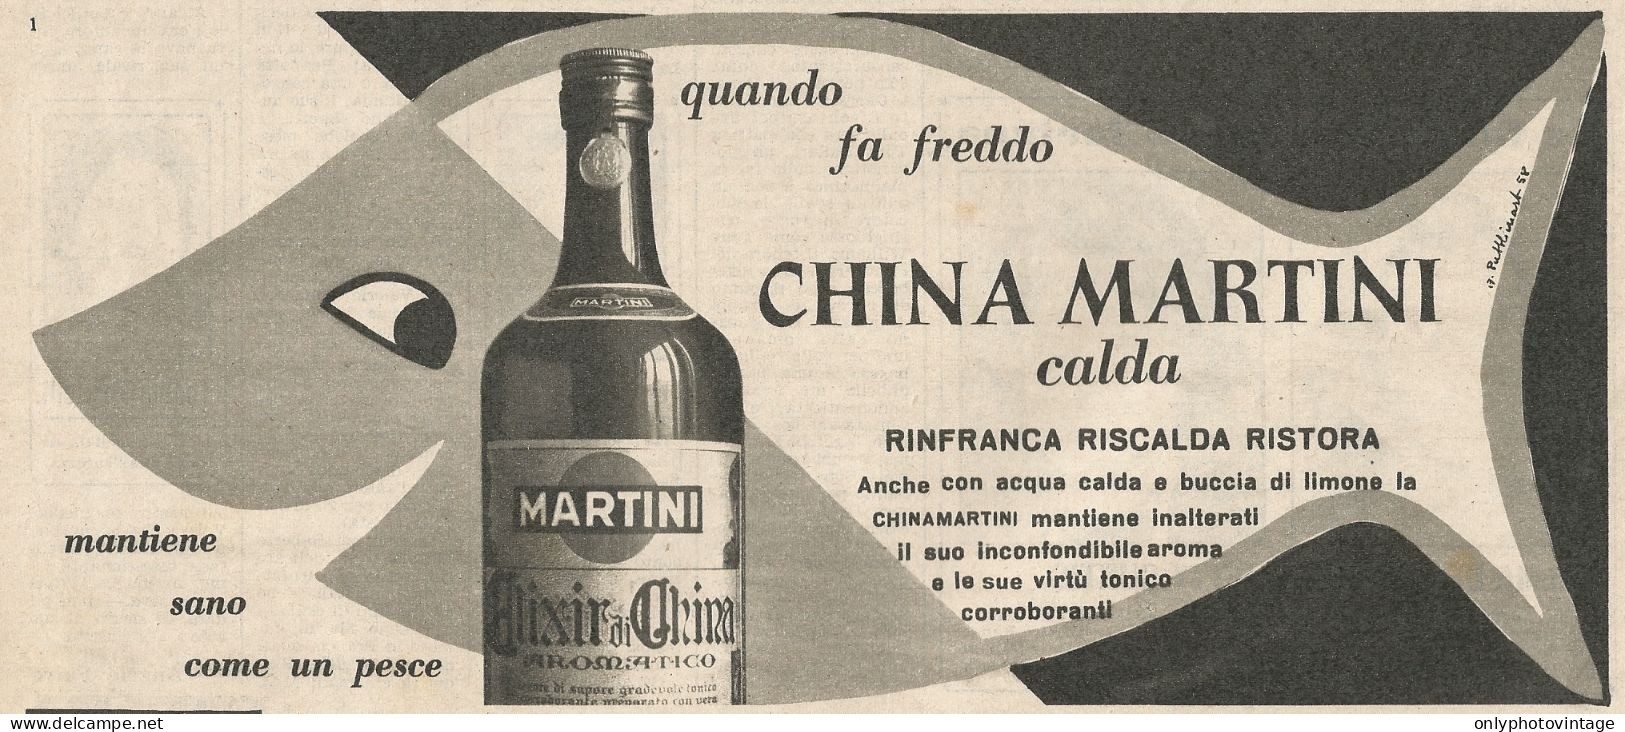 W1703 China Martini Calda - Pubblicità Del 1958 - Vintage Advertising - Advertising